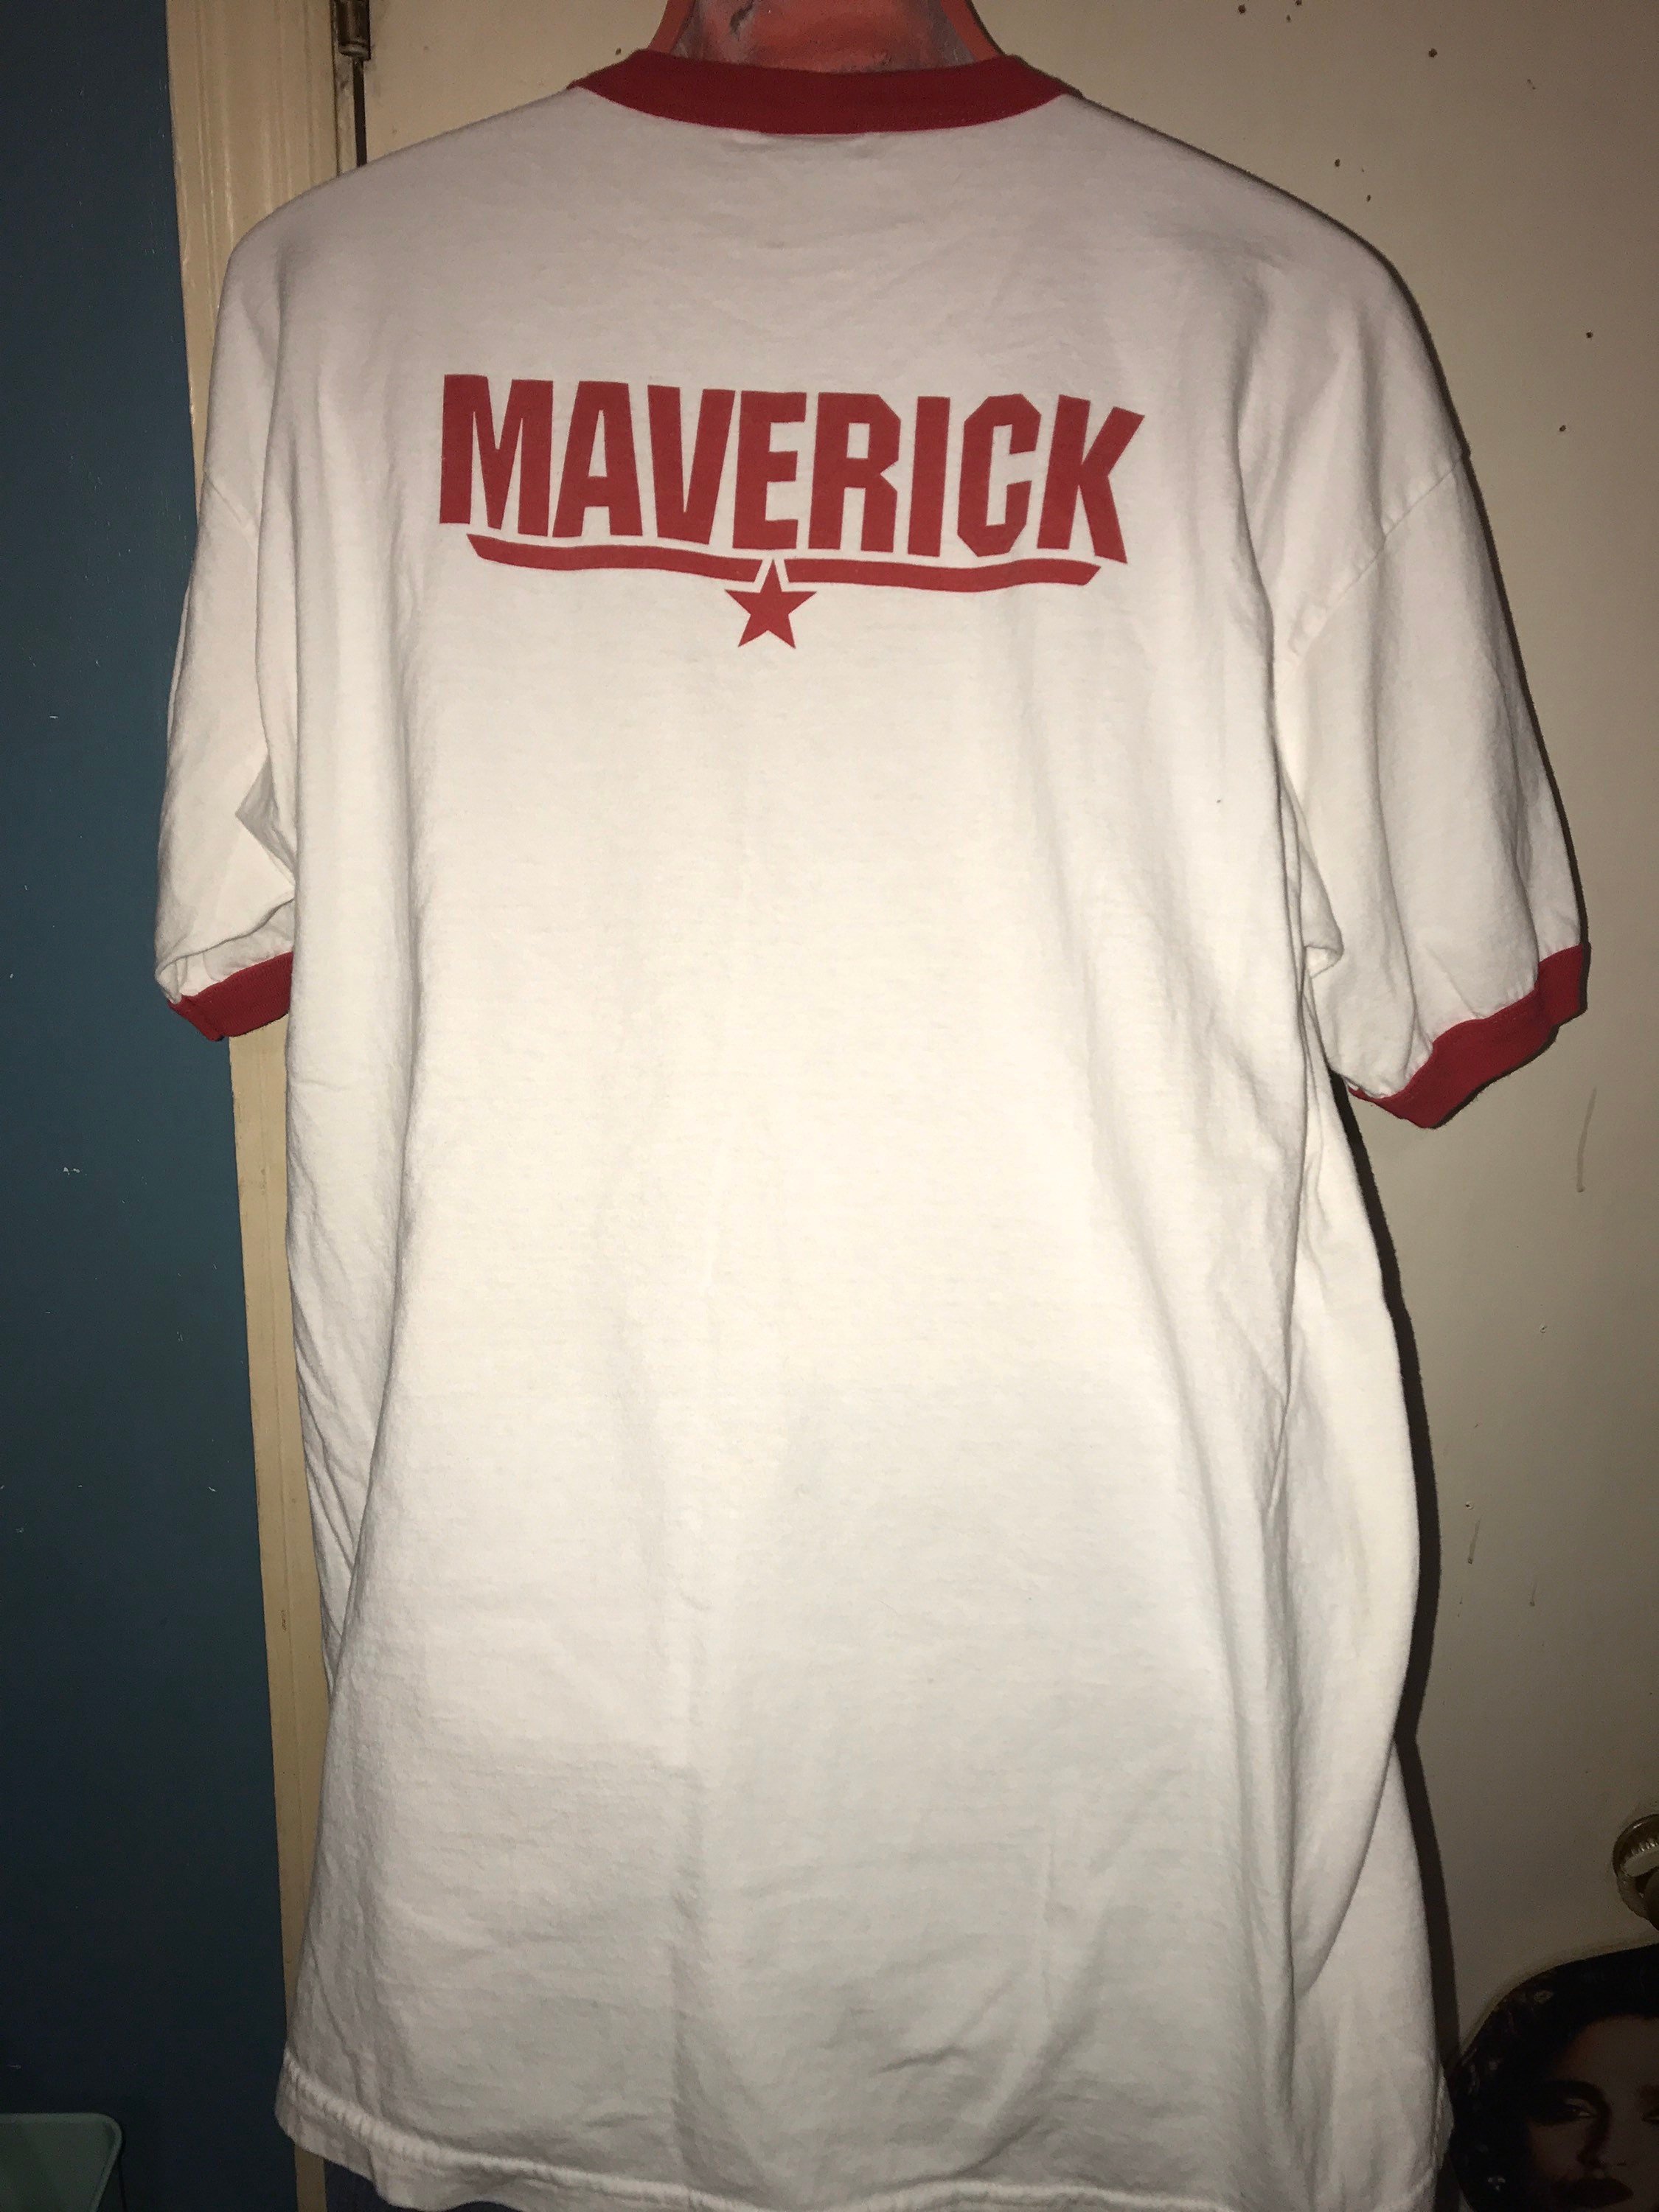 Vintage Top Gun T-shirt. White and Red Top Gun Movie T-shirt. Maverick ...